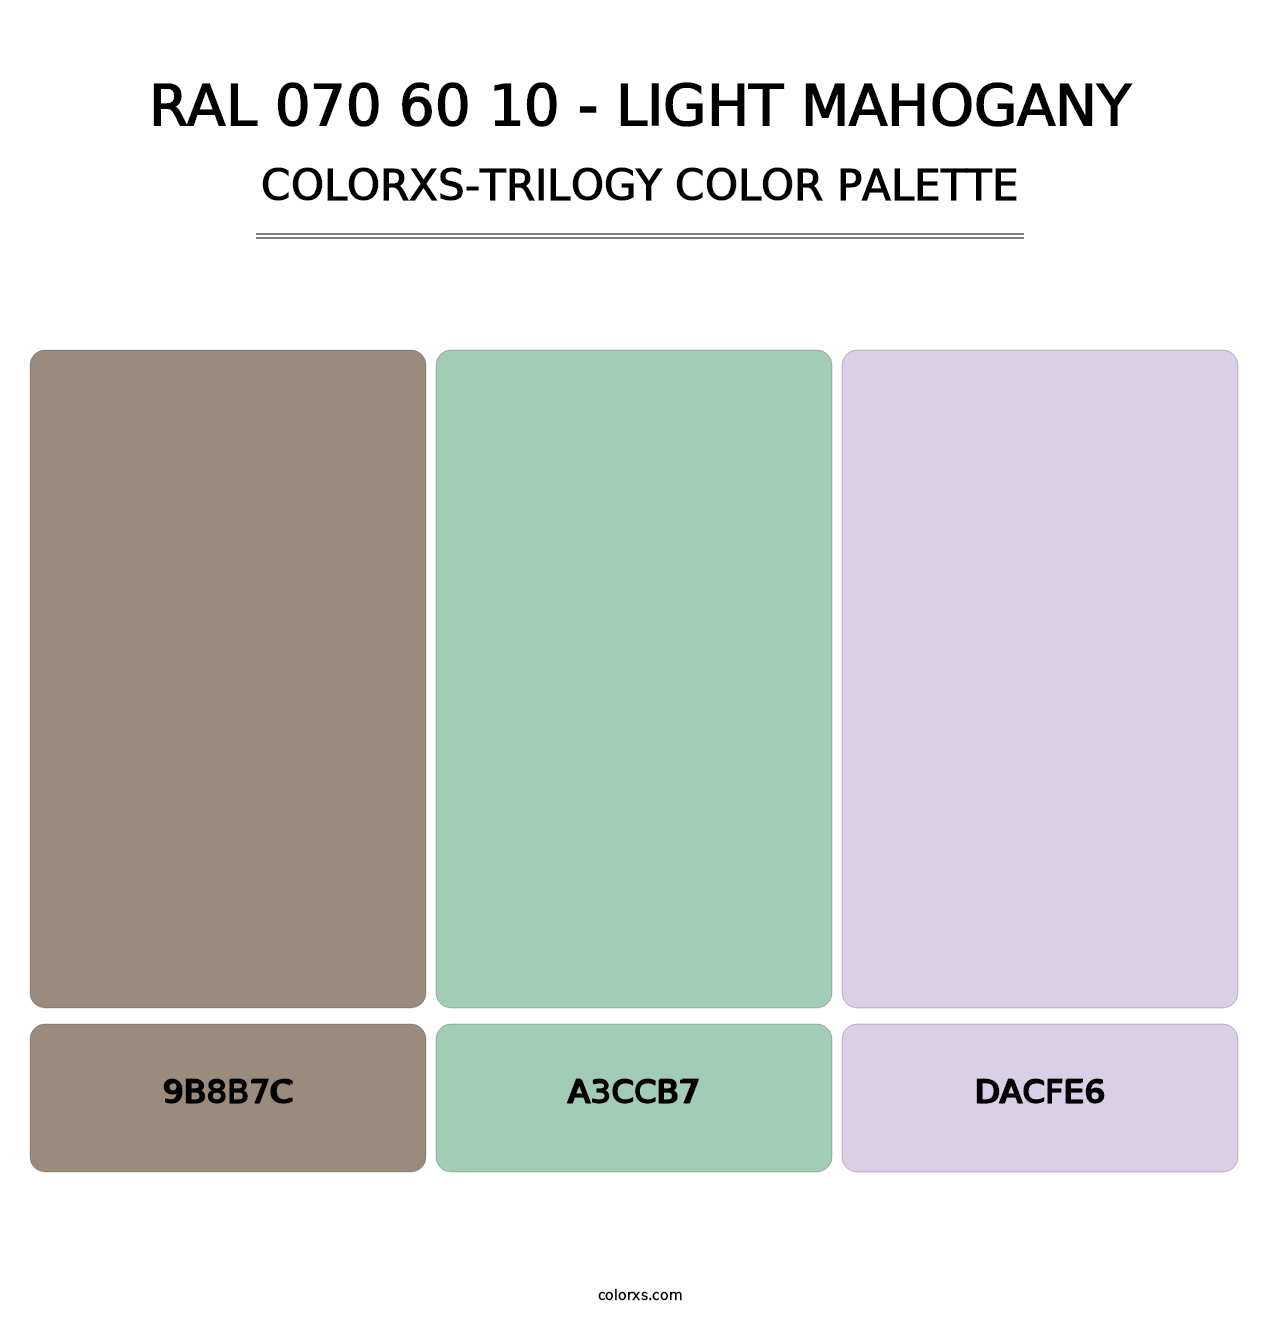 RAL 070 60 10 - Light Mahogany - Colorxs Trilogy Palette